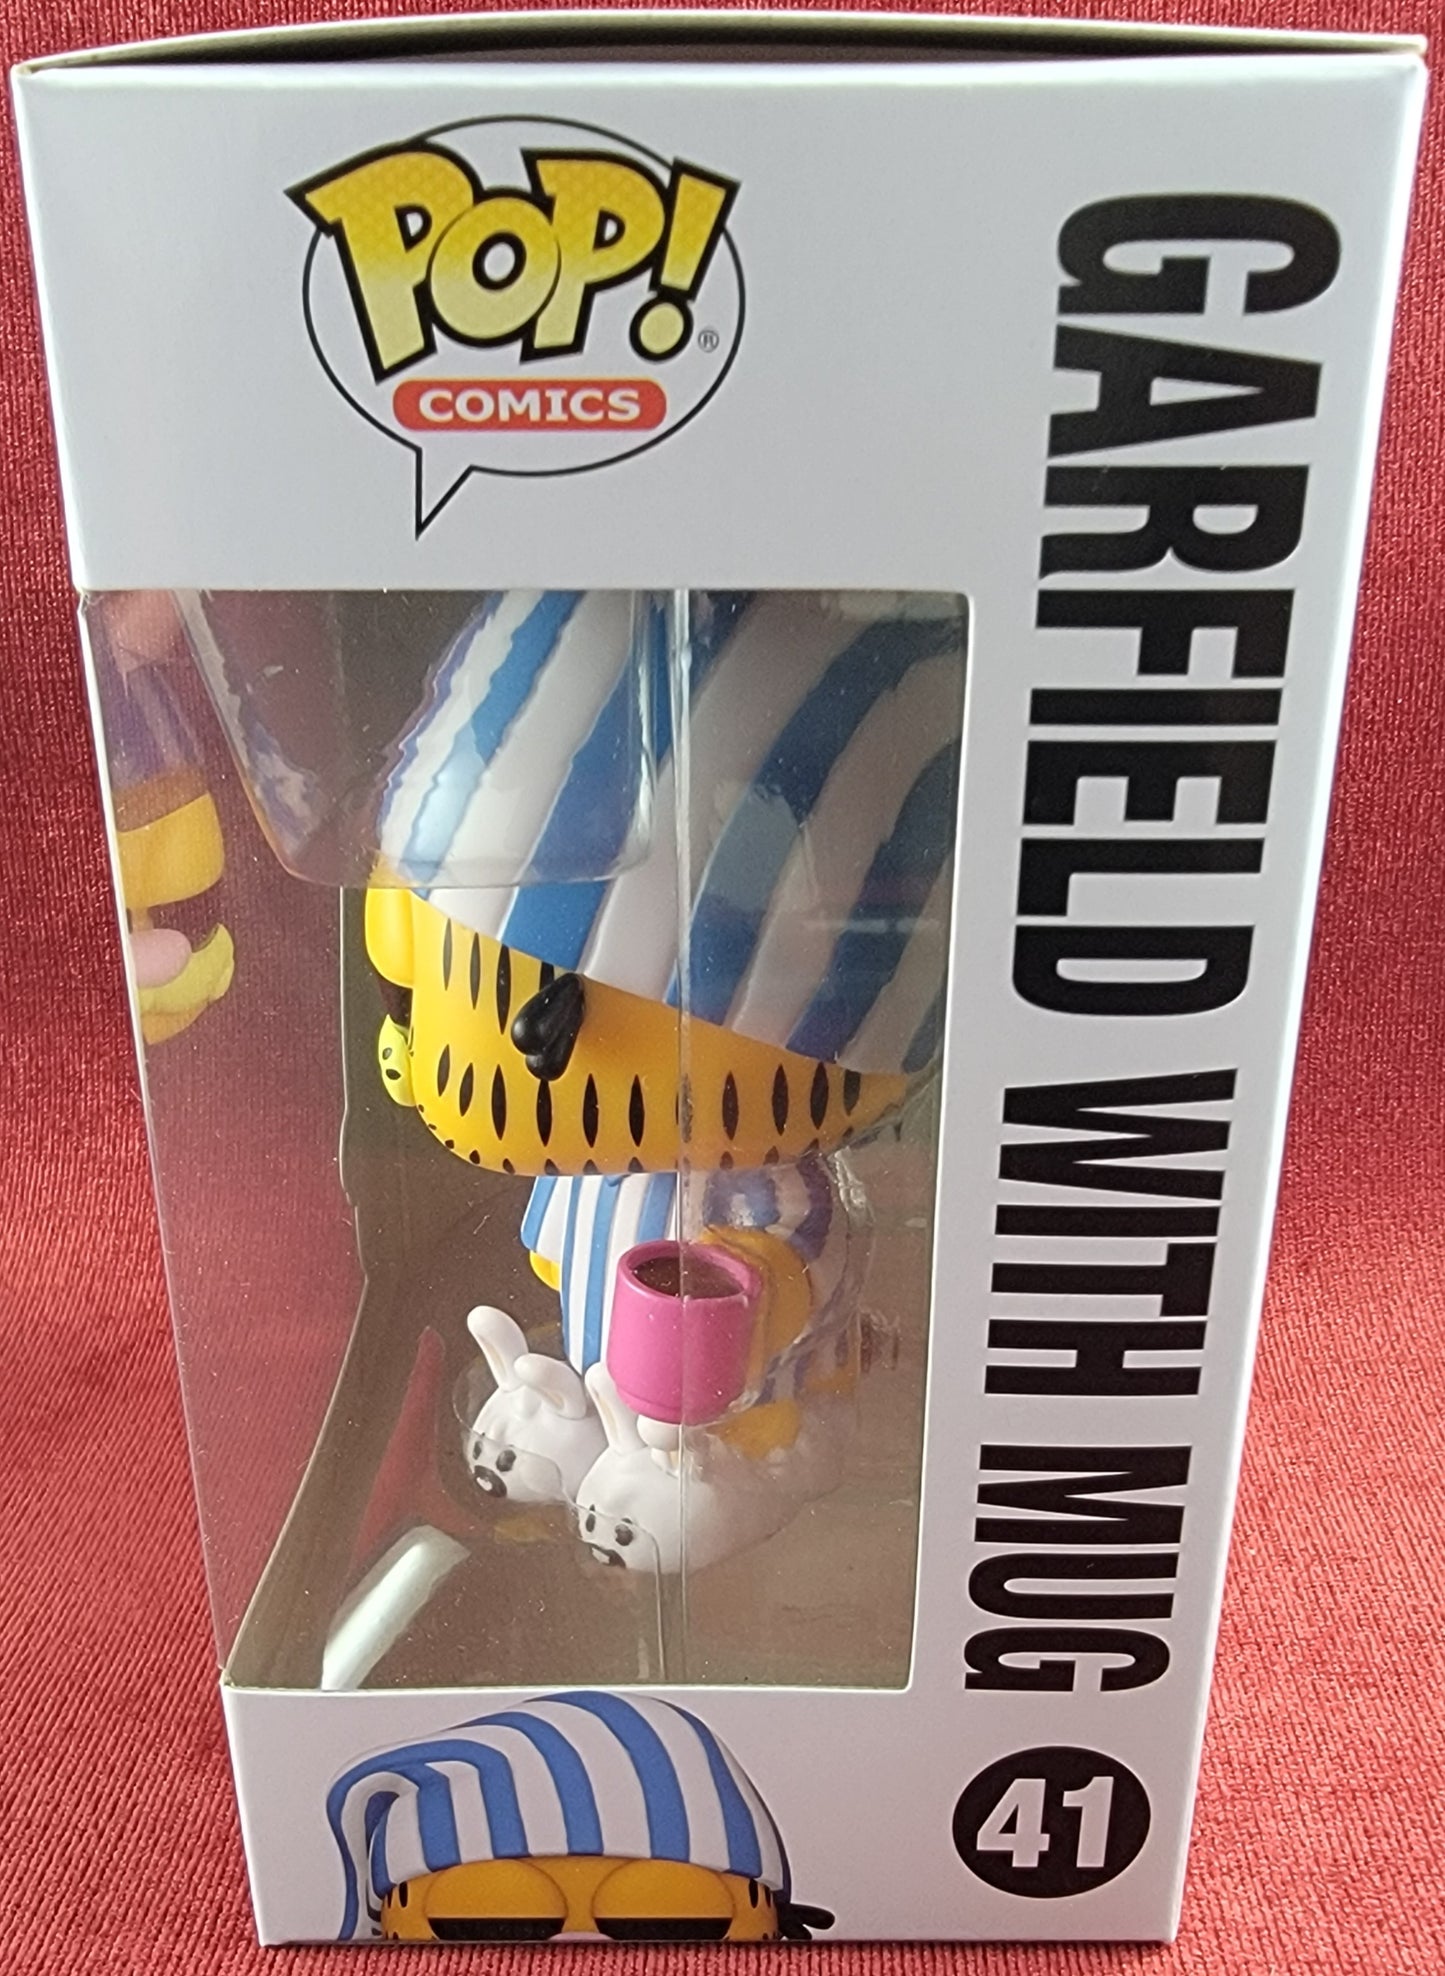 Garfield with mug funko # 41 (nib)
With pop protector